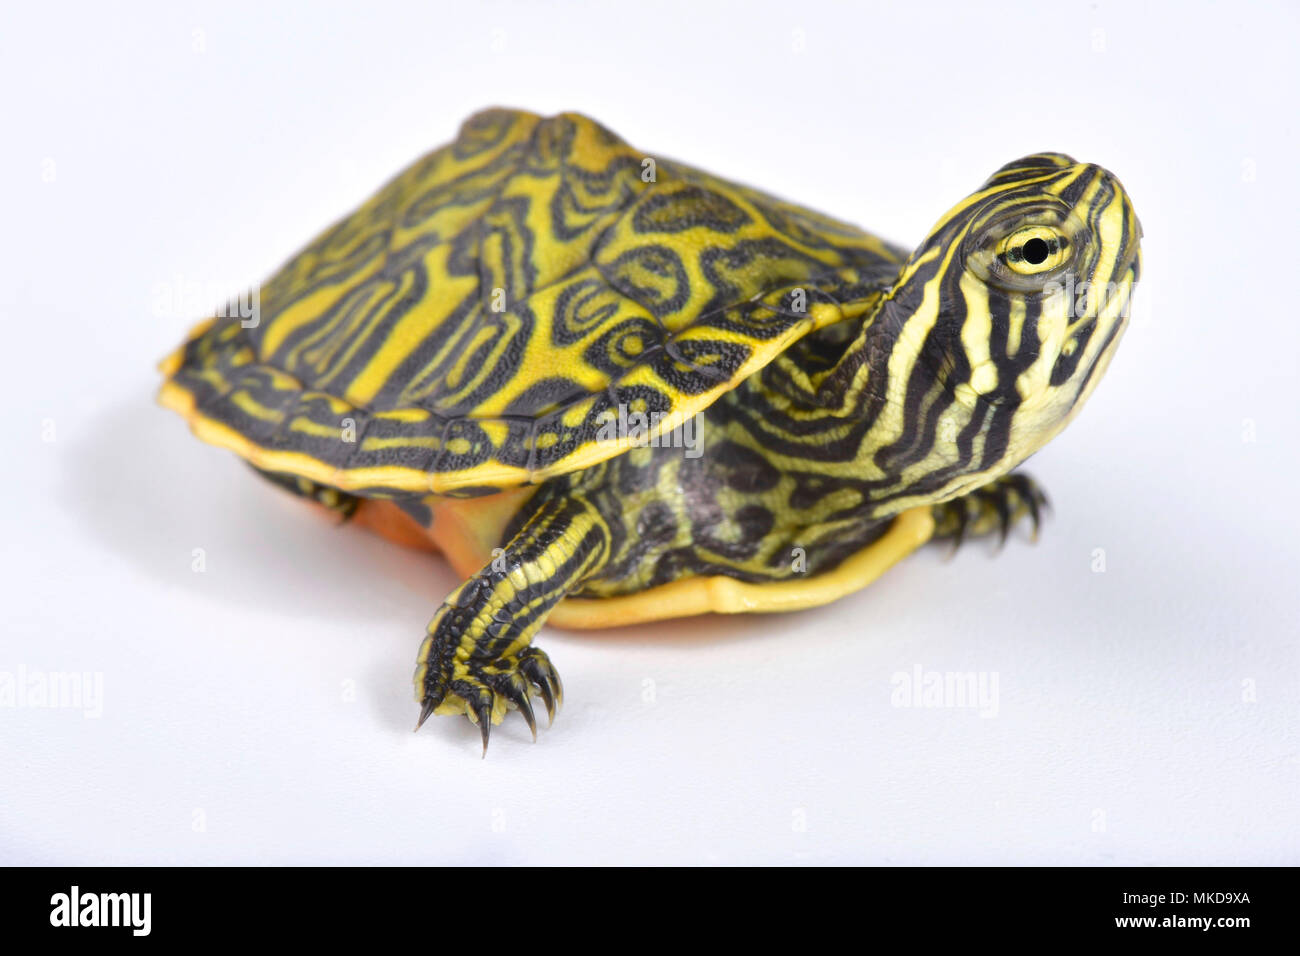 Florida redbelly turtle (Pseudemys nelsoni) on white background Stock Photo